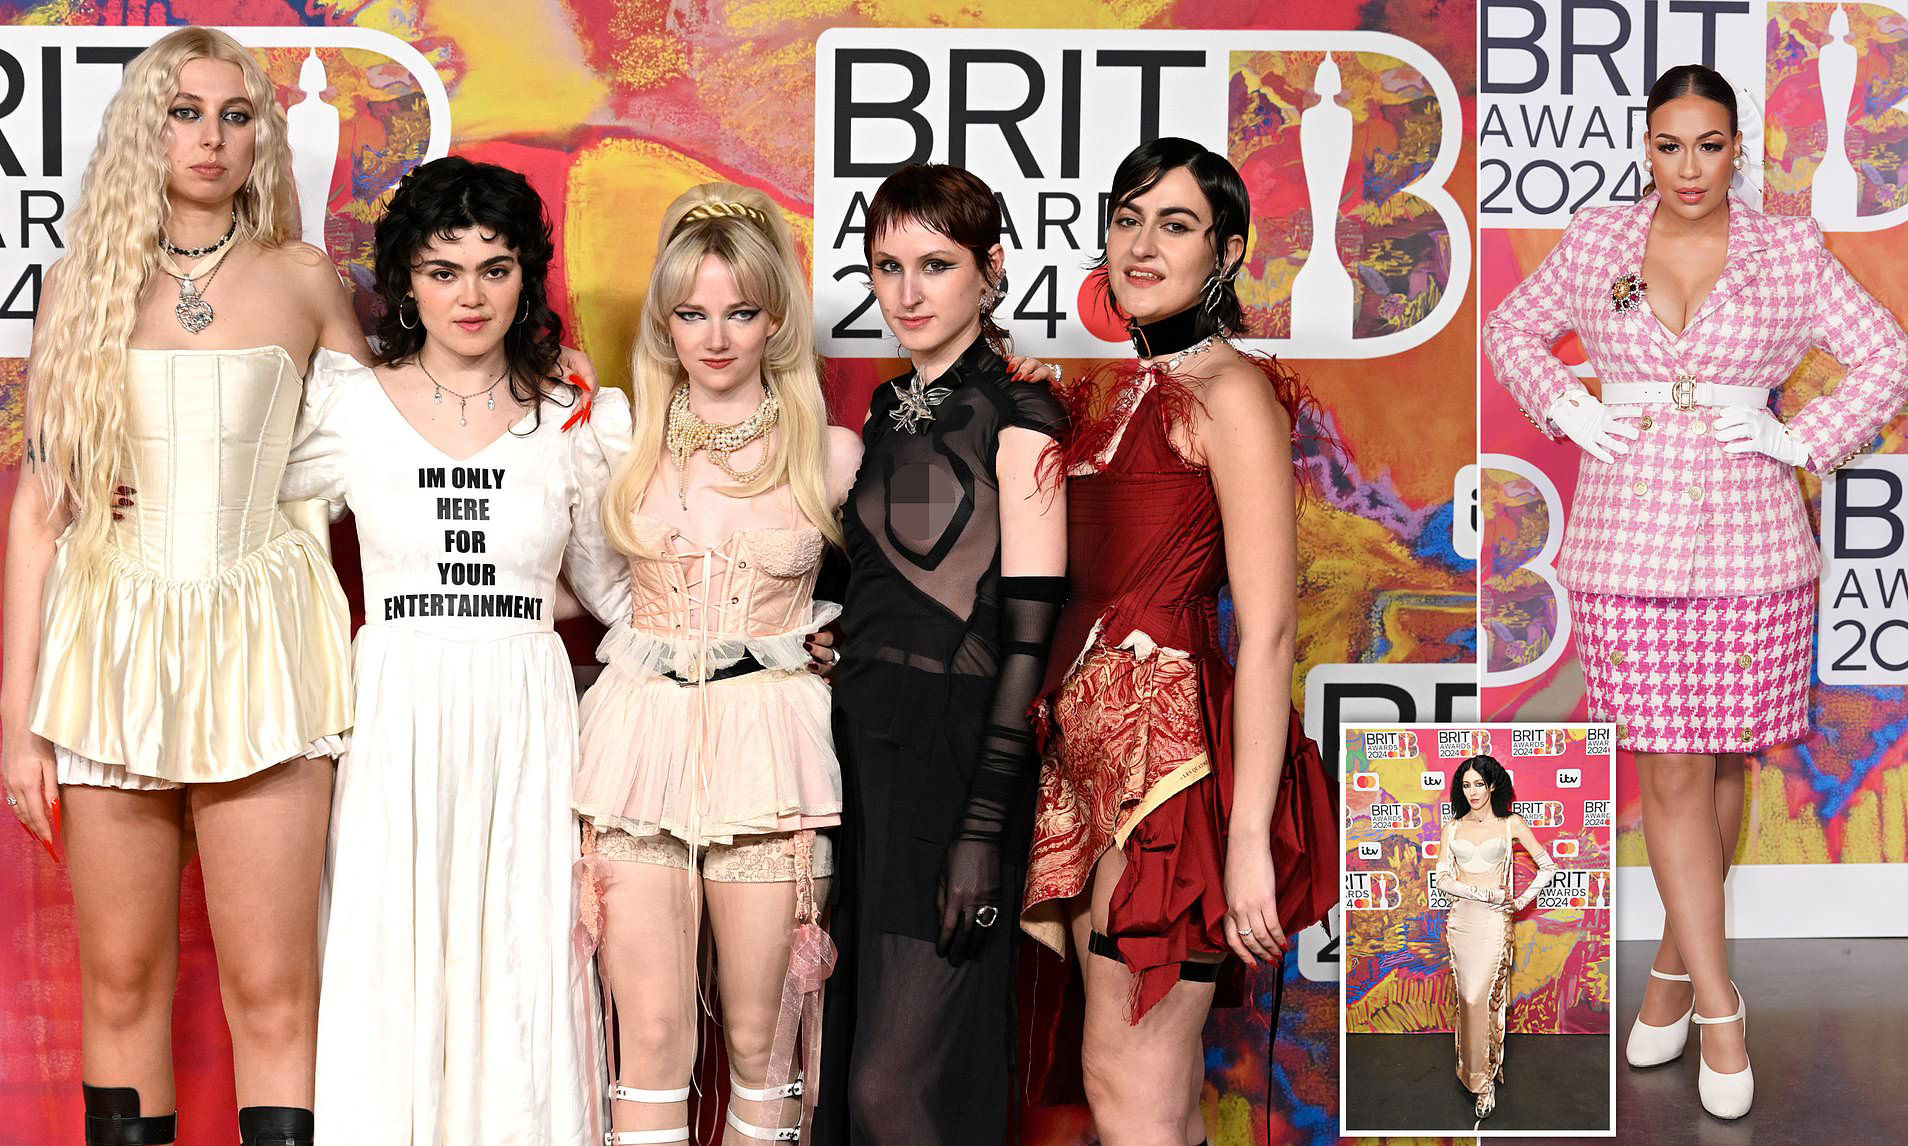 BRIT Awards 2024 worst dressed gingham overload, excessive cone bras